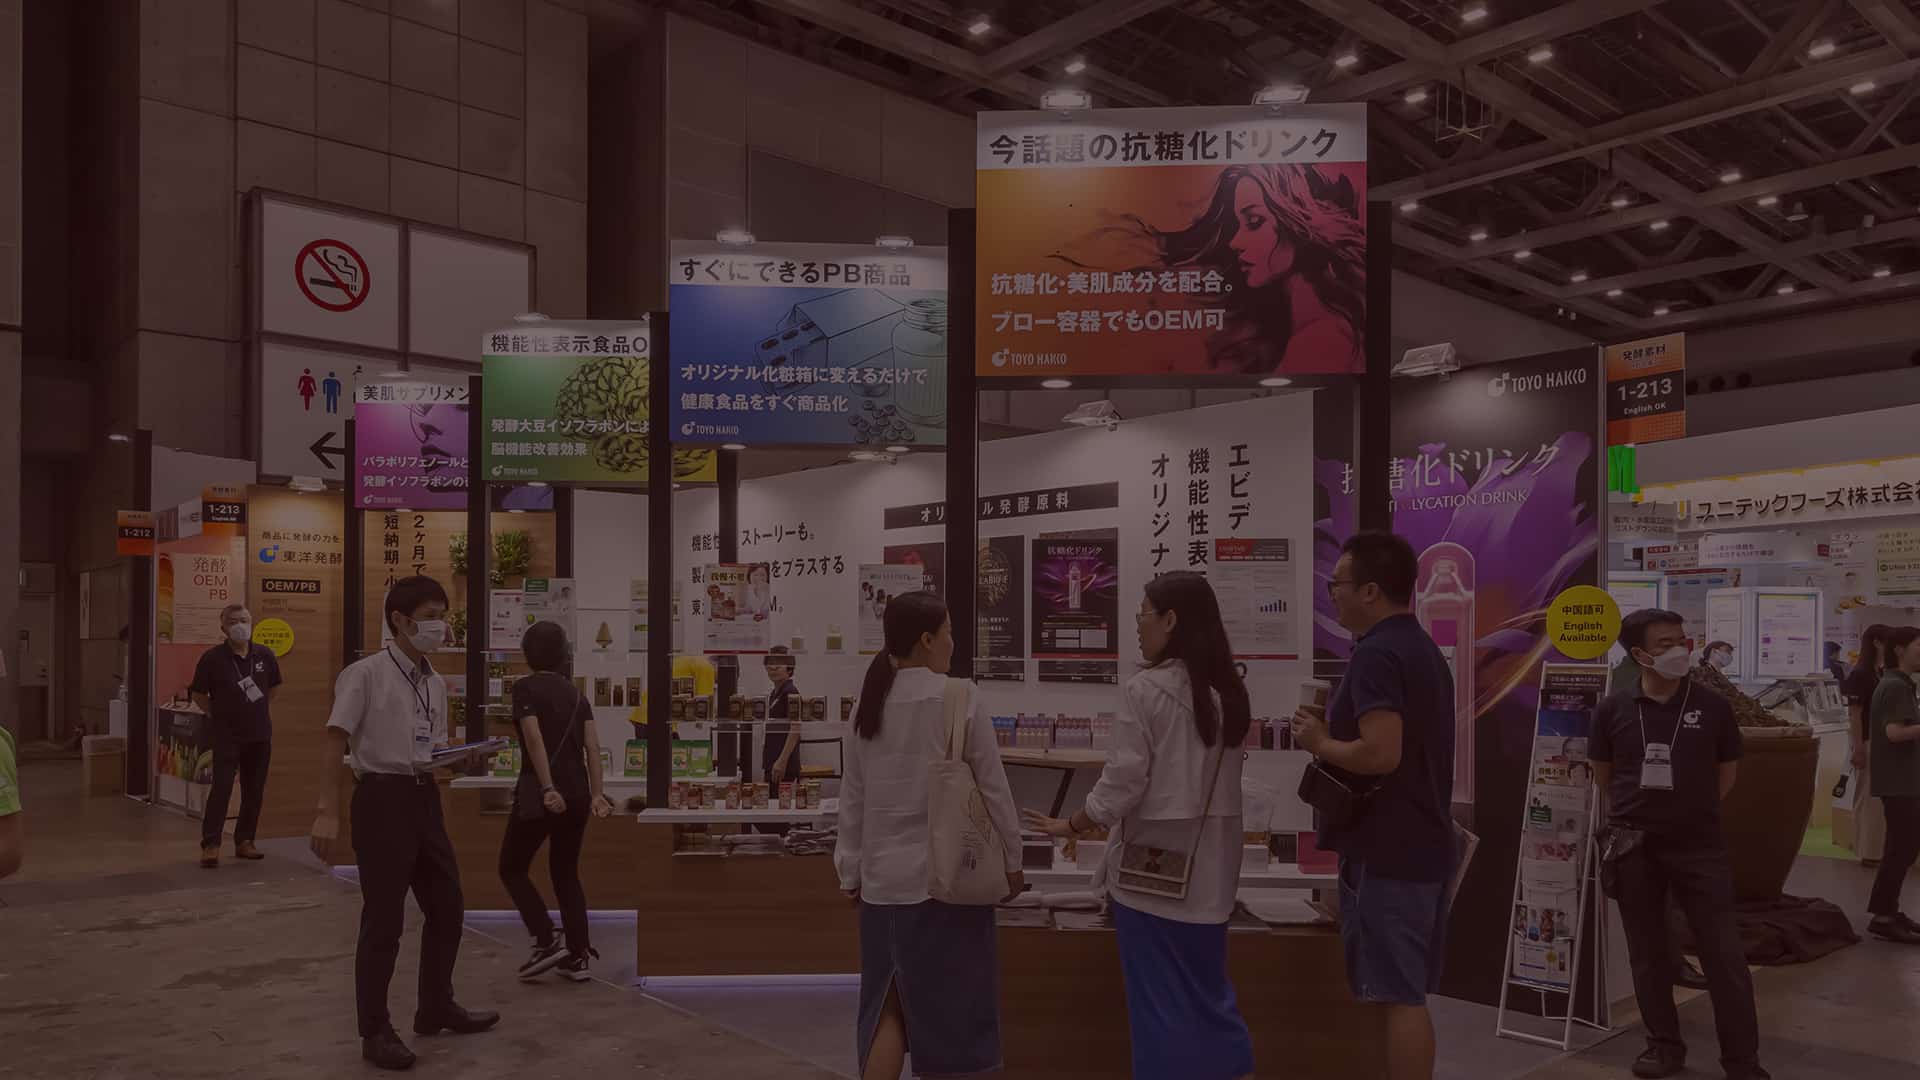 Visitors networking at exhibitor stands at Hi Japan